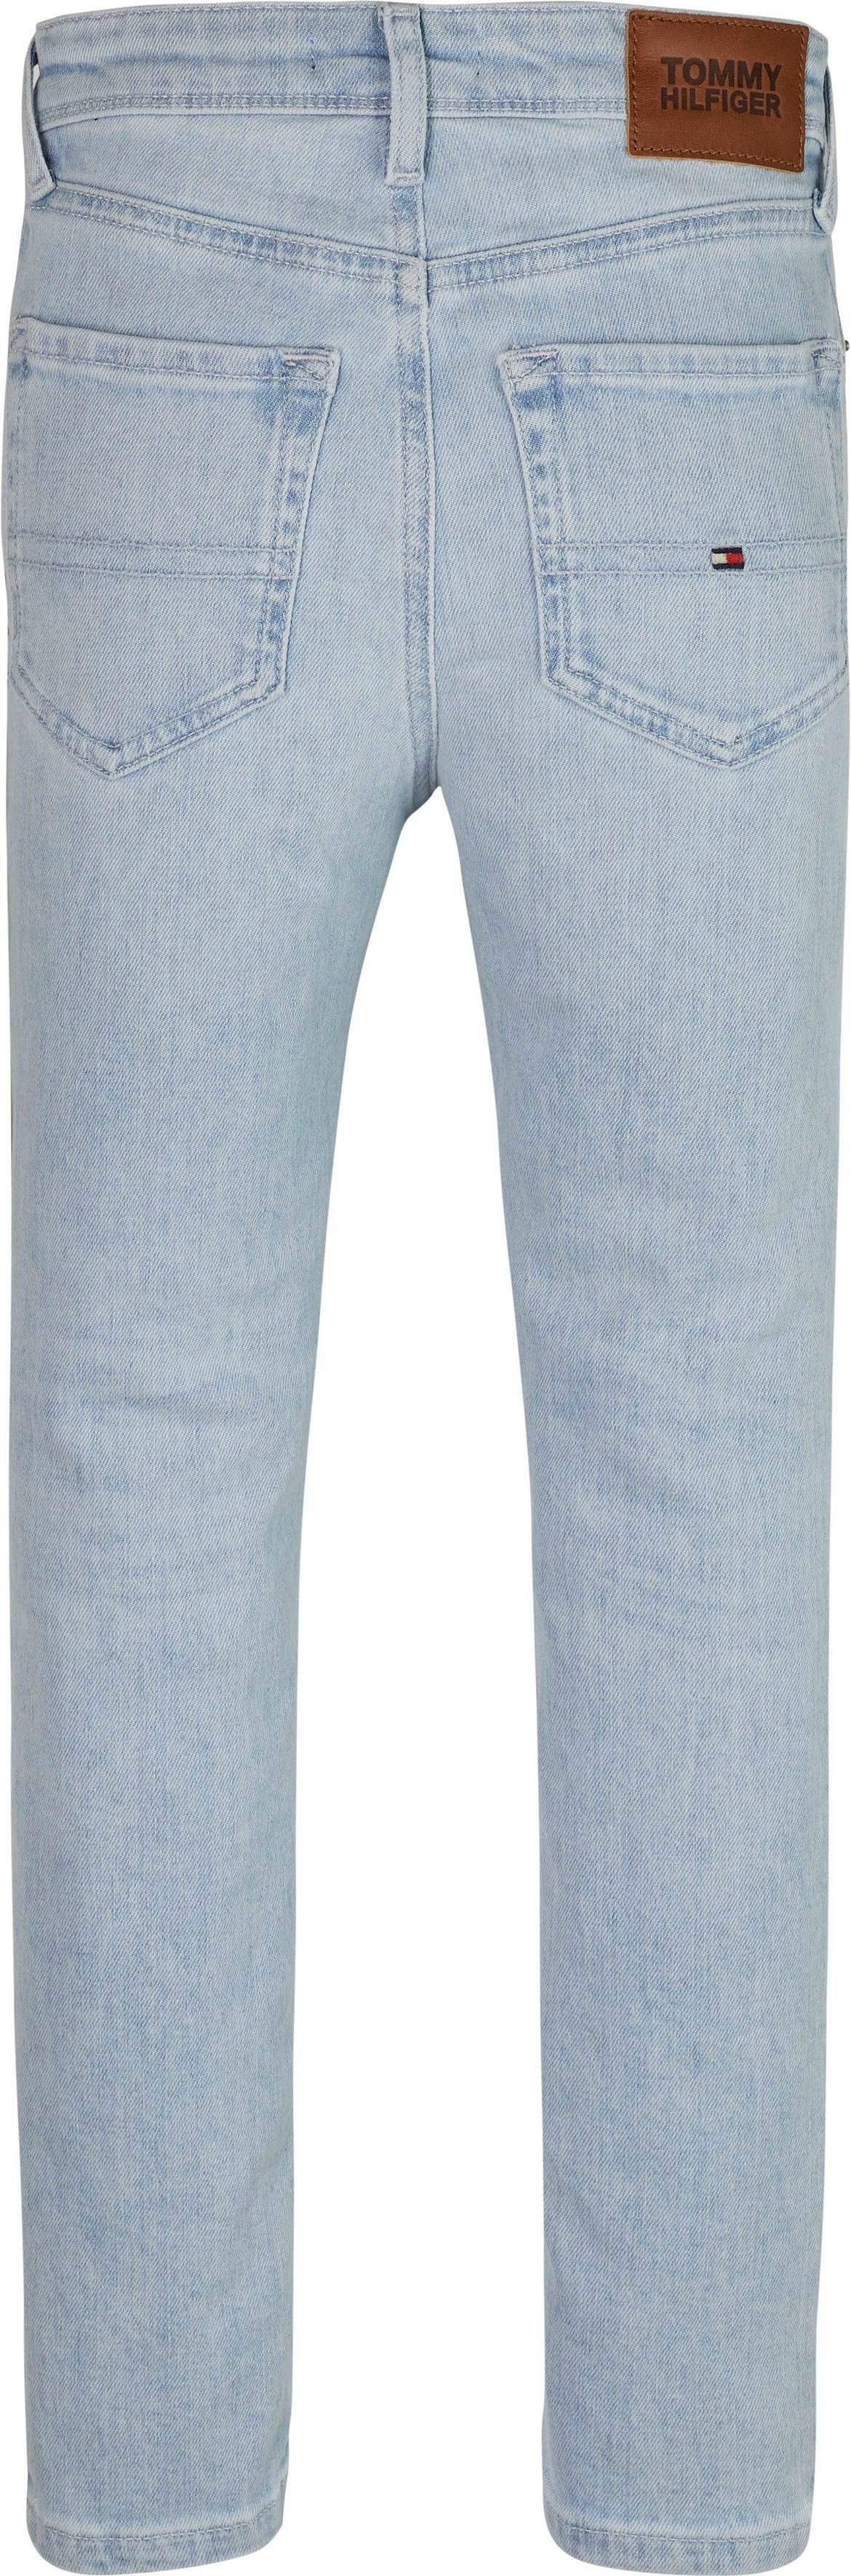 Hilfiger Tommy Y SCANTON HEMP im LIGHT Slim-fit-Jeans 5-Pocket-Style